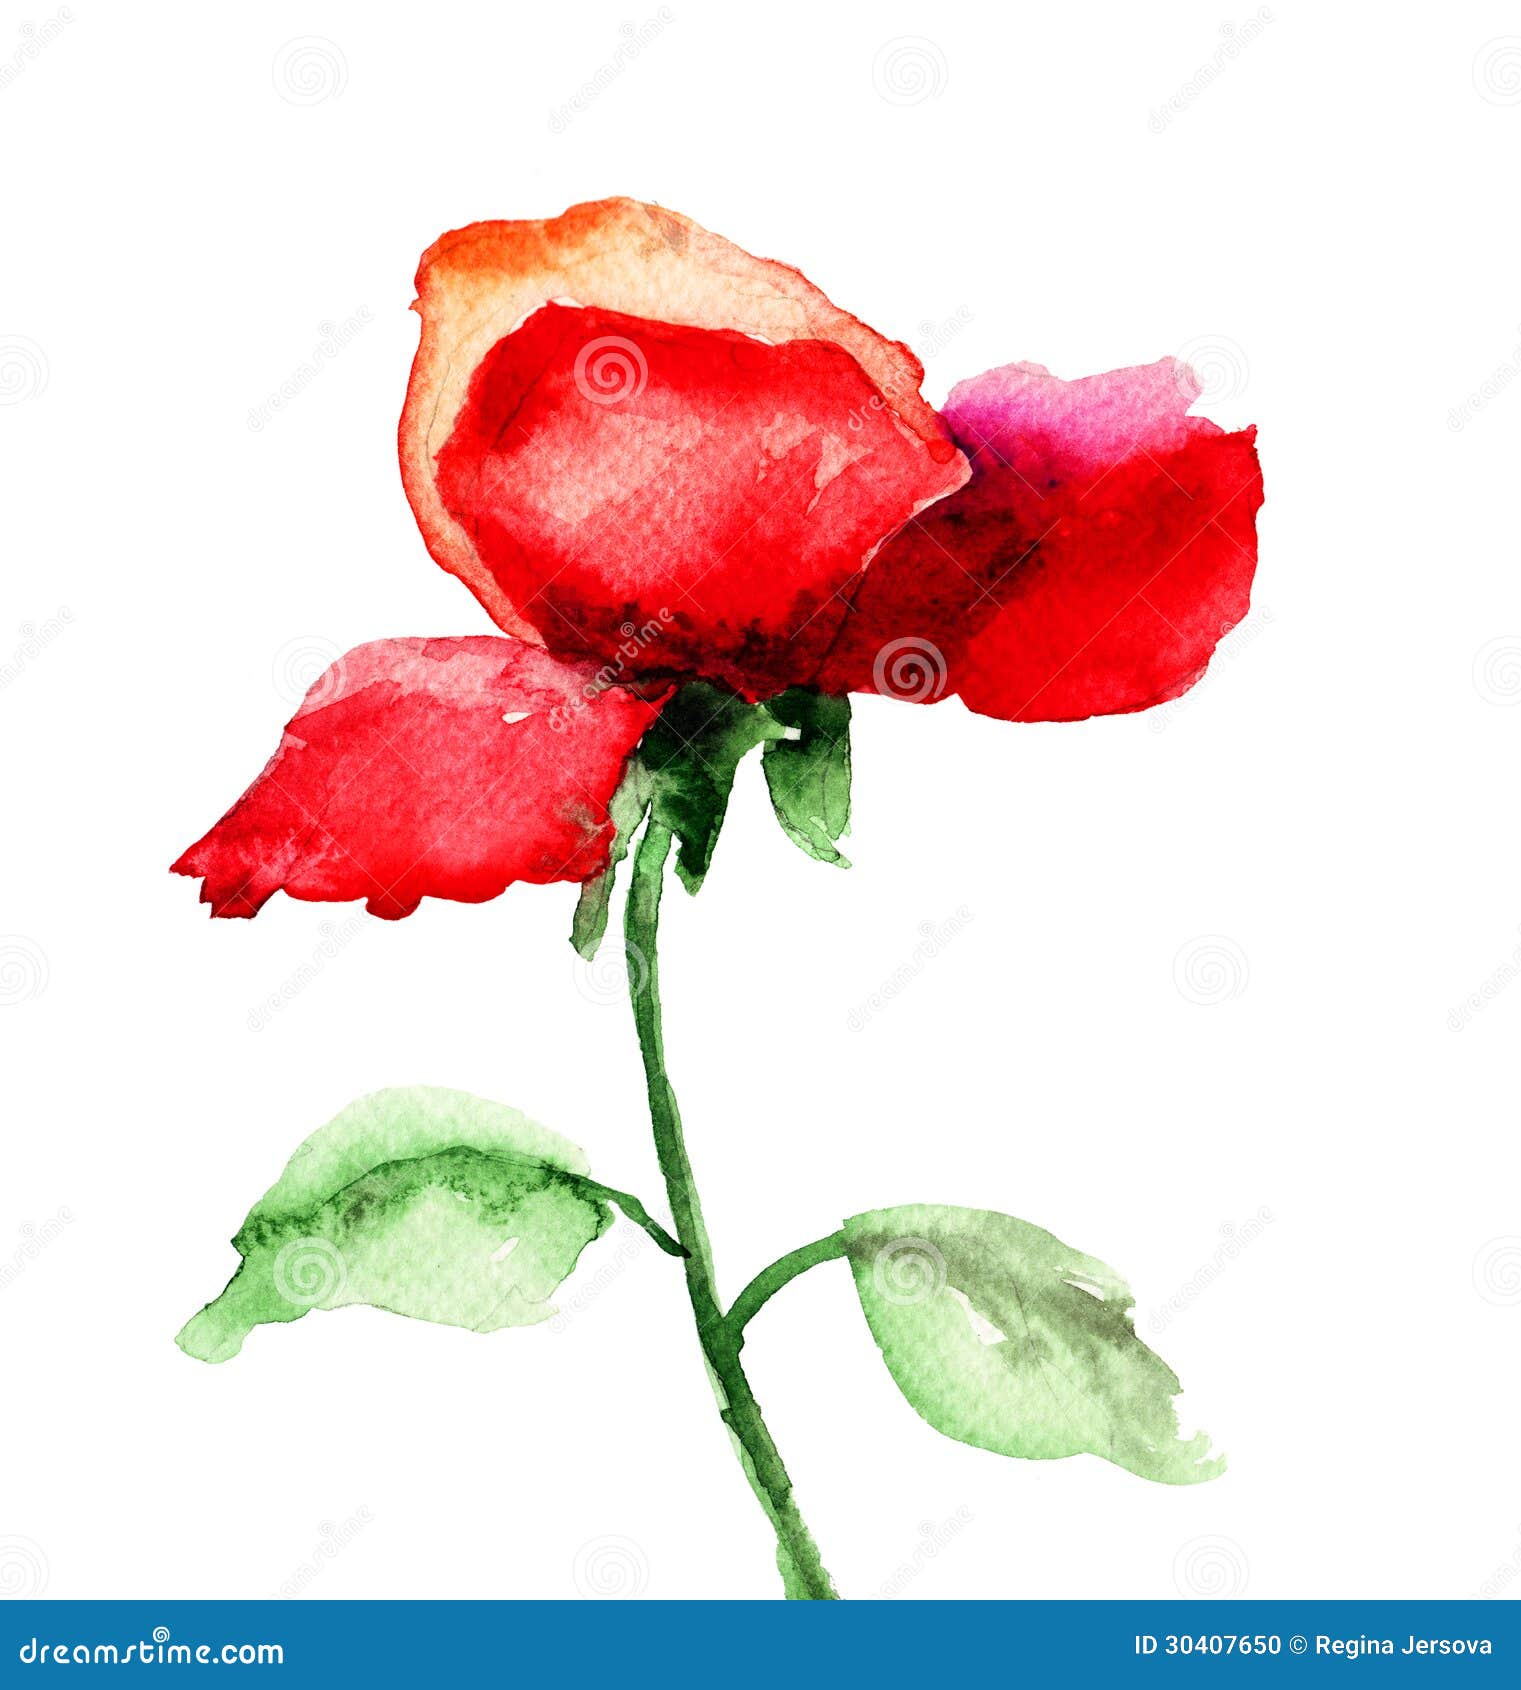 Red Rose flower stock illustration. Illustration of sketching - 30407650